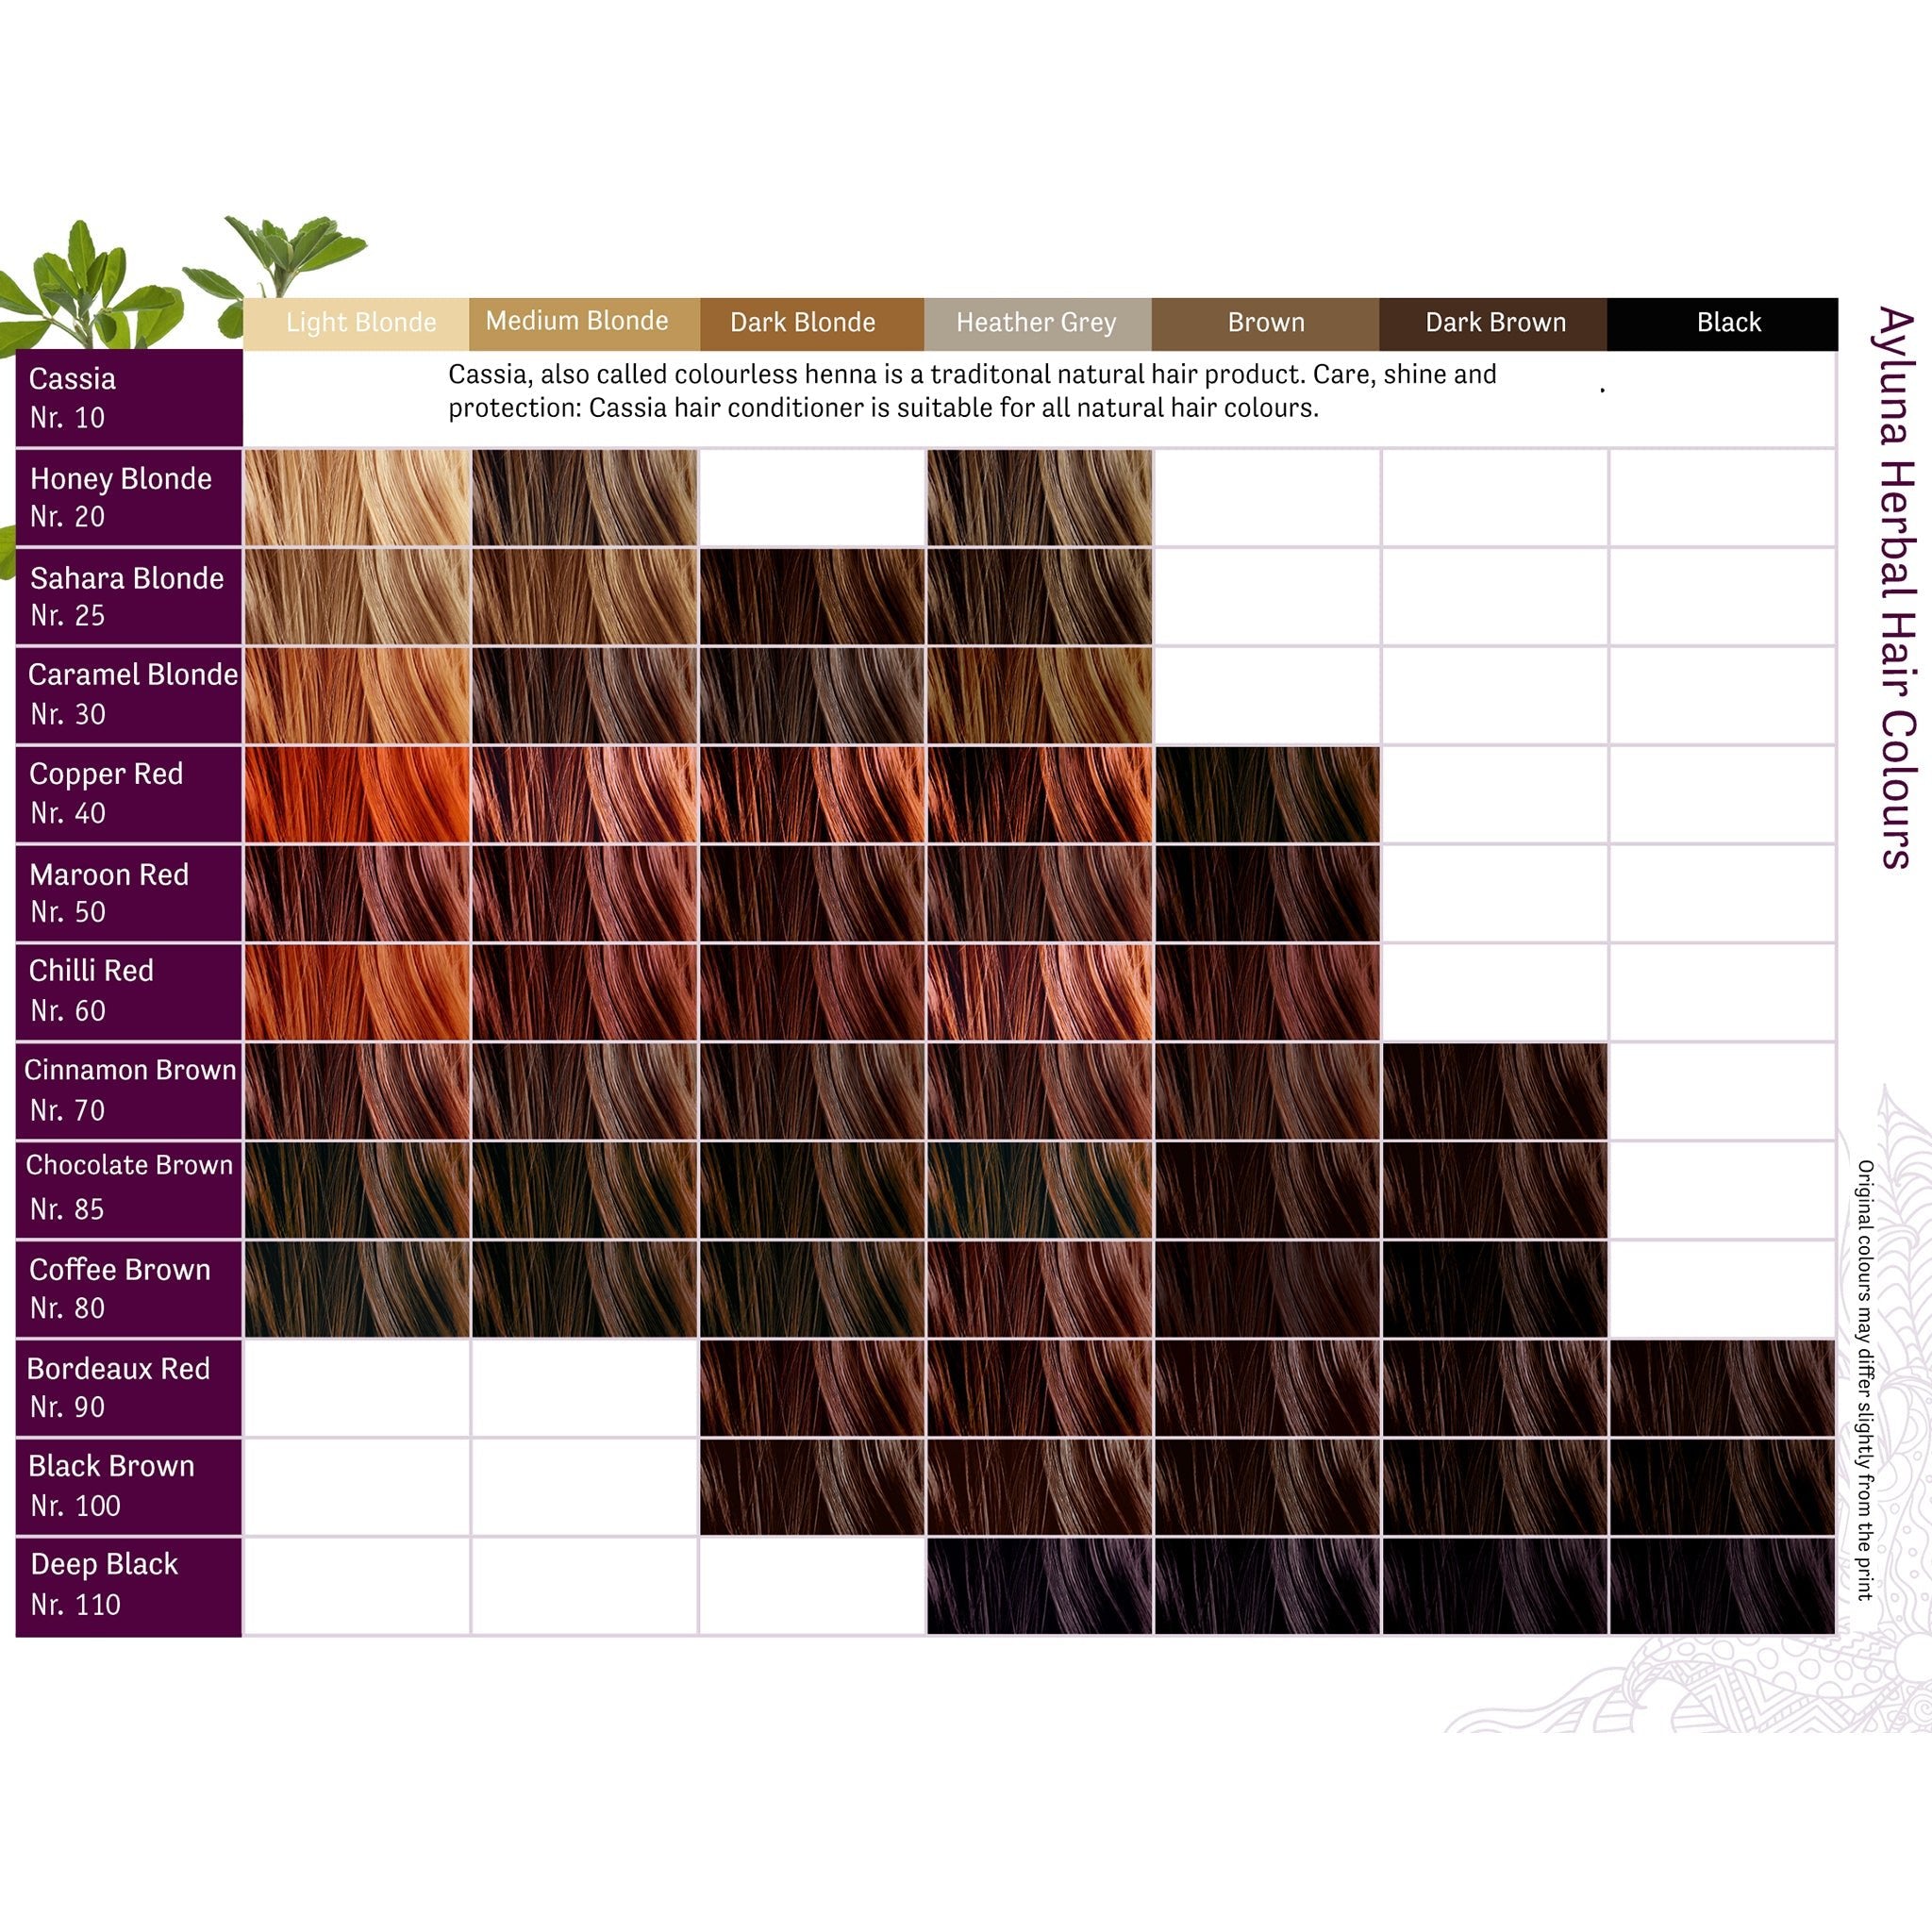 Plant-based Hair Dye - Black Brown - mypure.co.uk